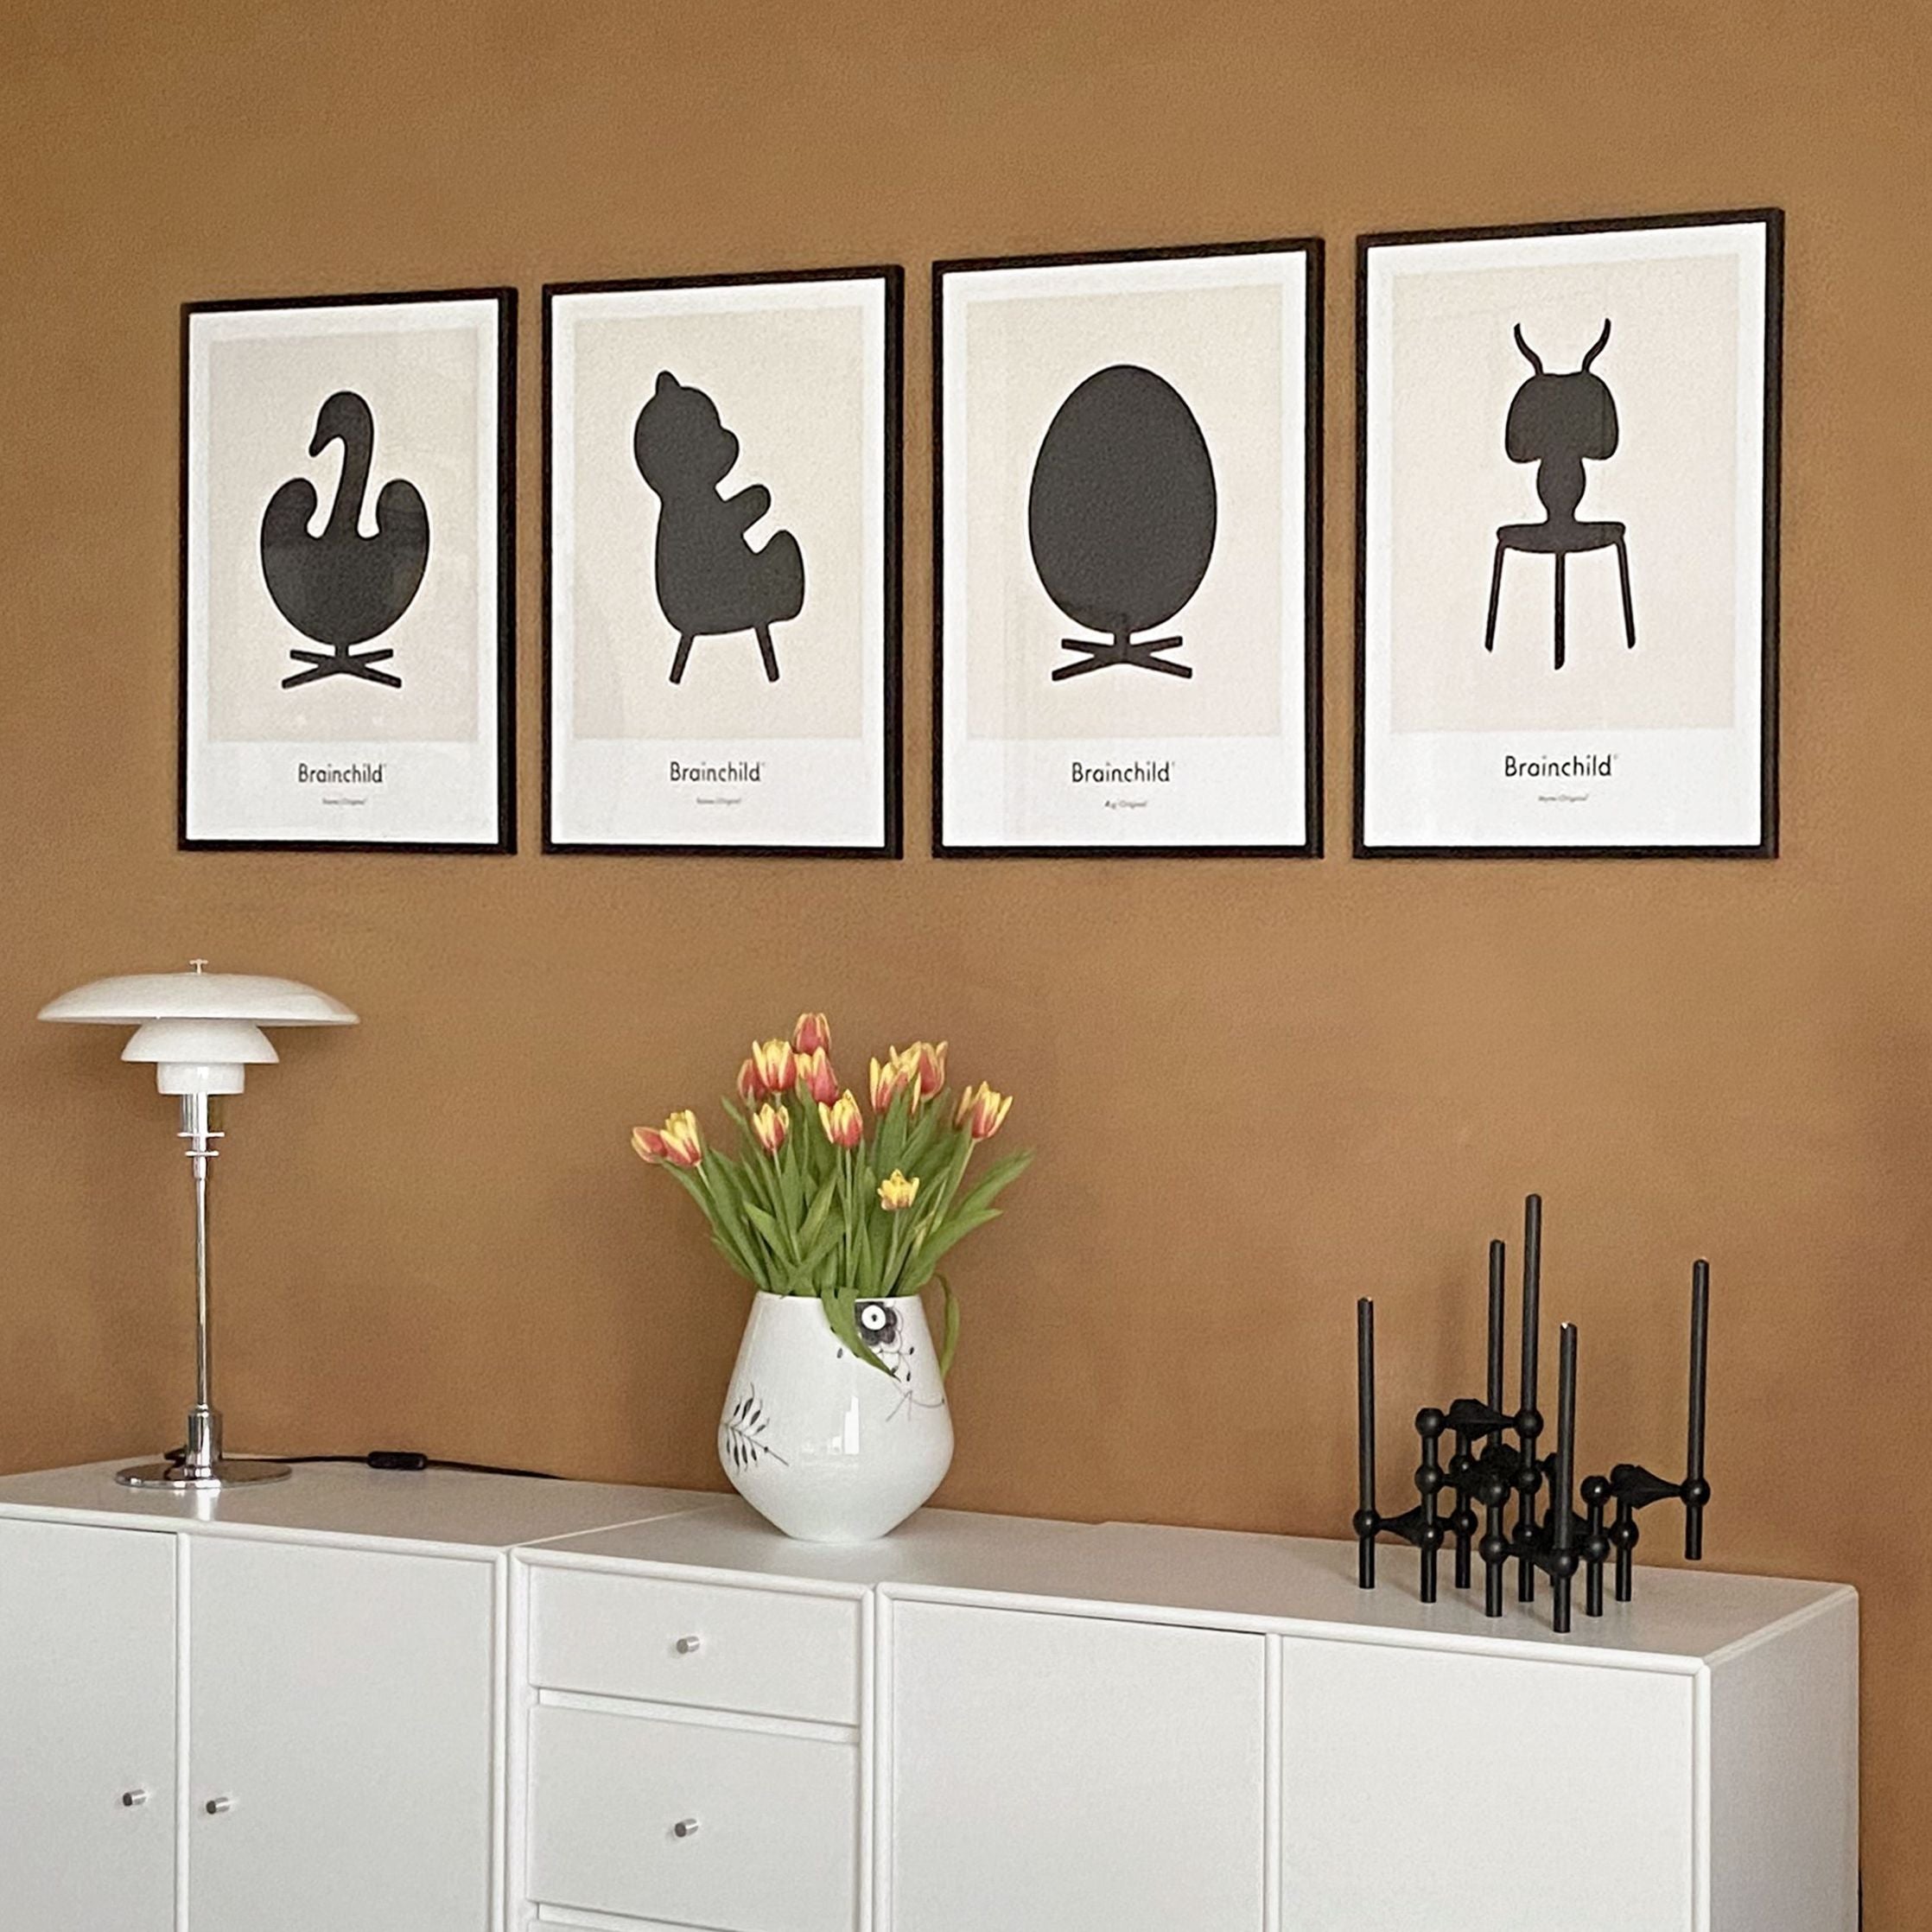 Brainchild Teddy Bear Design Icon Poster, Frame Made Of Dark Wood 50x70 Cm, Grey